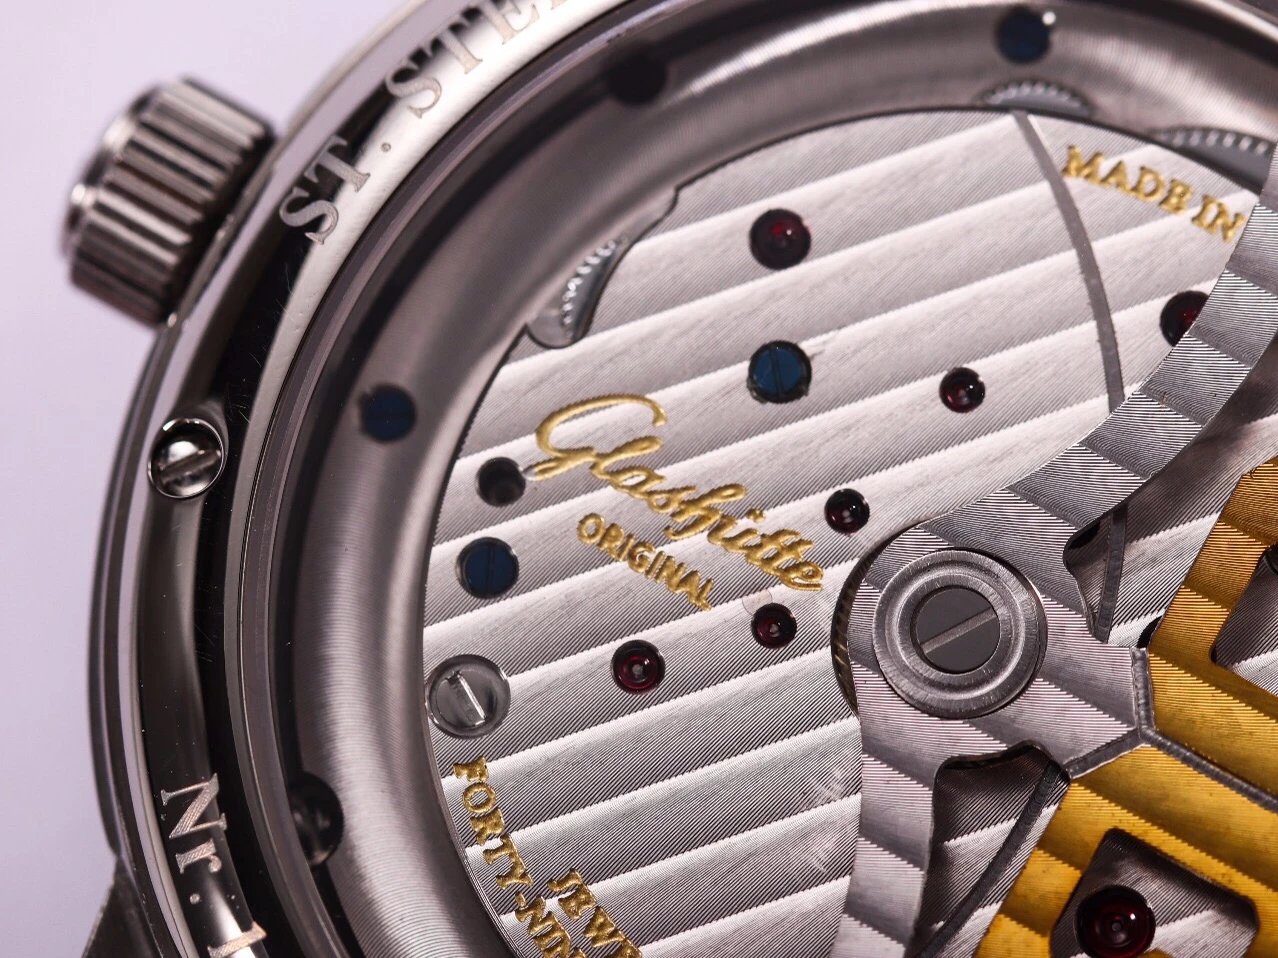 TZ厂格拉苏蒂原创偏心系列1-66款PanoInverseXL男士腕表，自动机械机芯，皮表带，透底。42mm